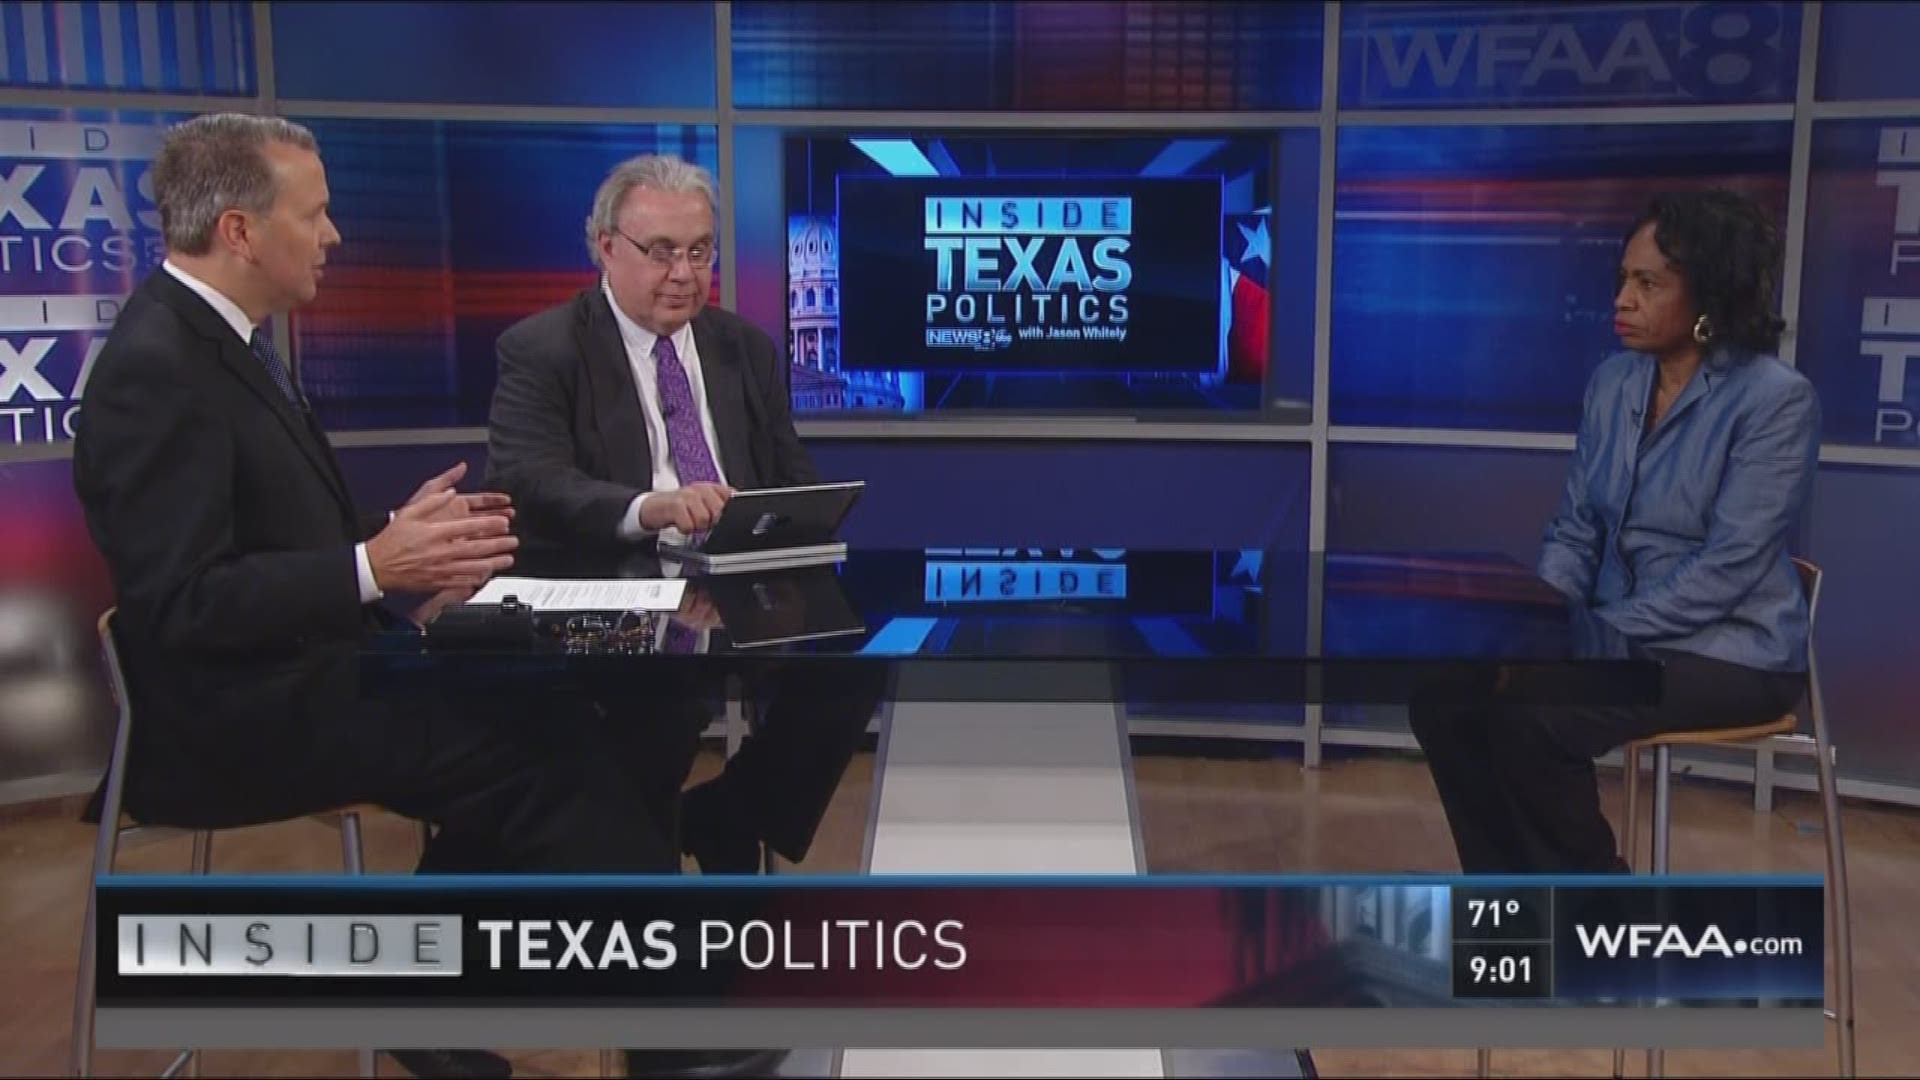 Newsmaker Inside Texas Politics (10/1/17)